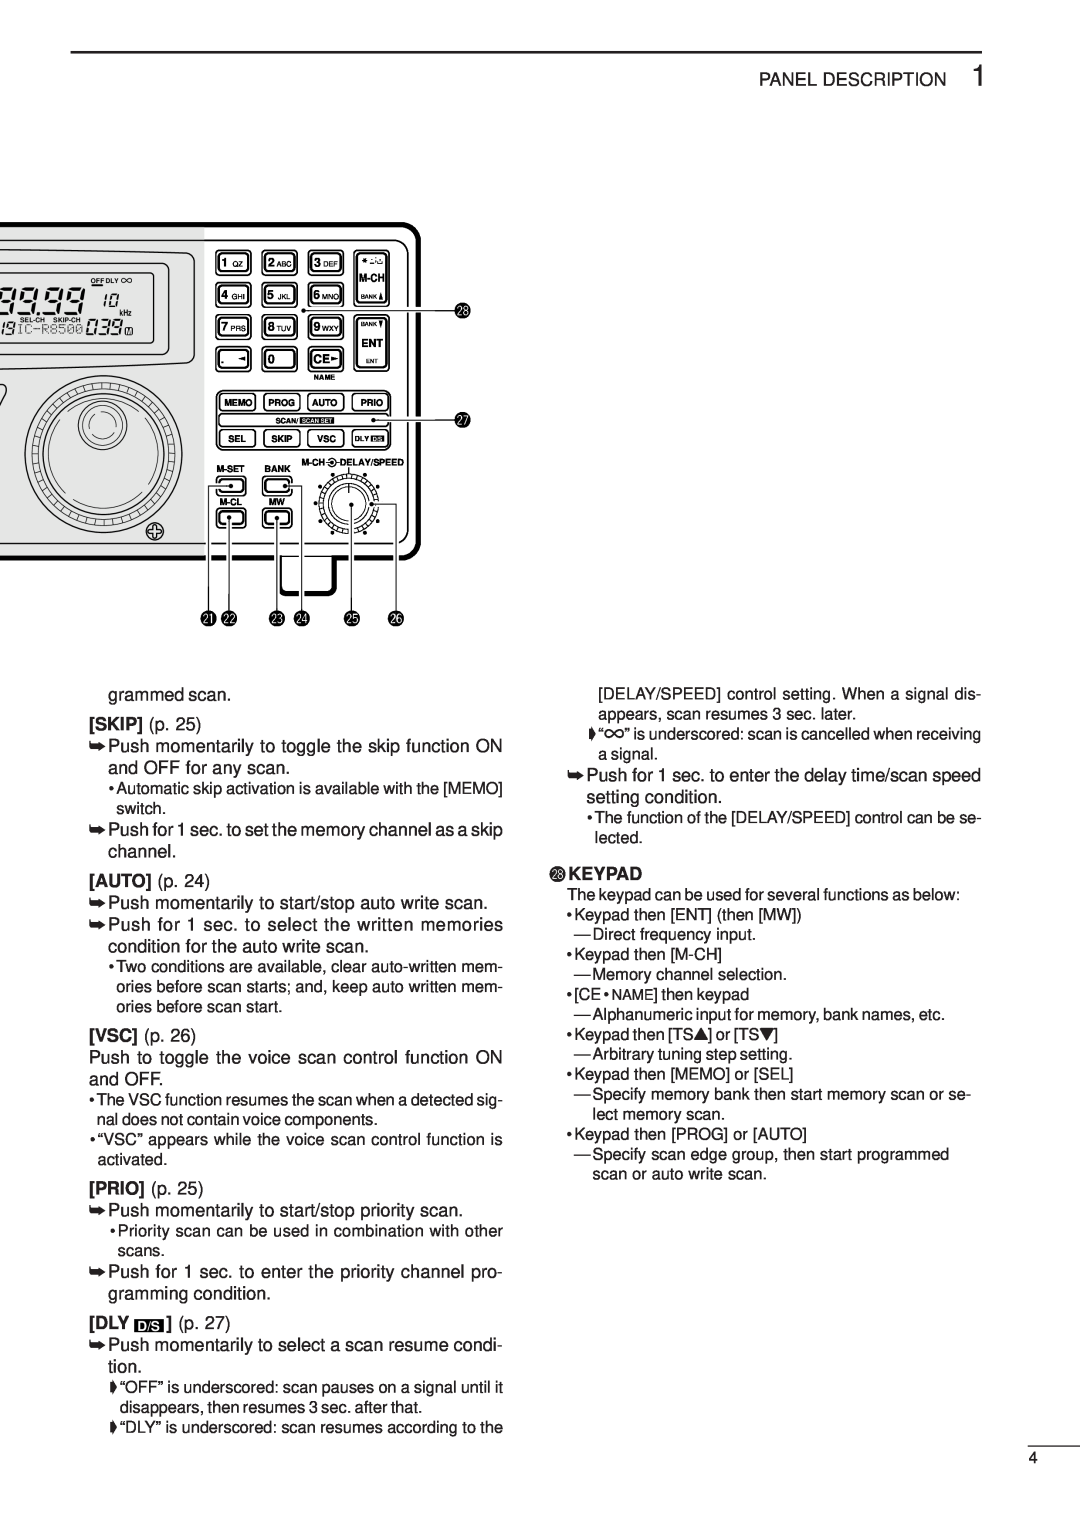 Icom IC-R8500 instruction manual SKIP p, AUTO p, PRIO p, DLY D/S p, @8KEYPAD 